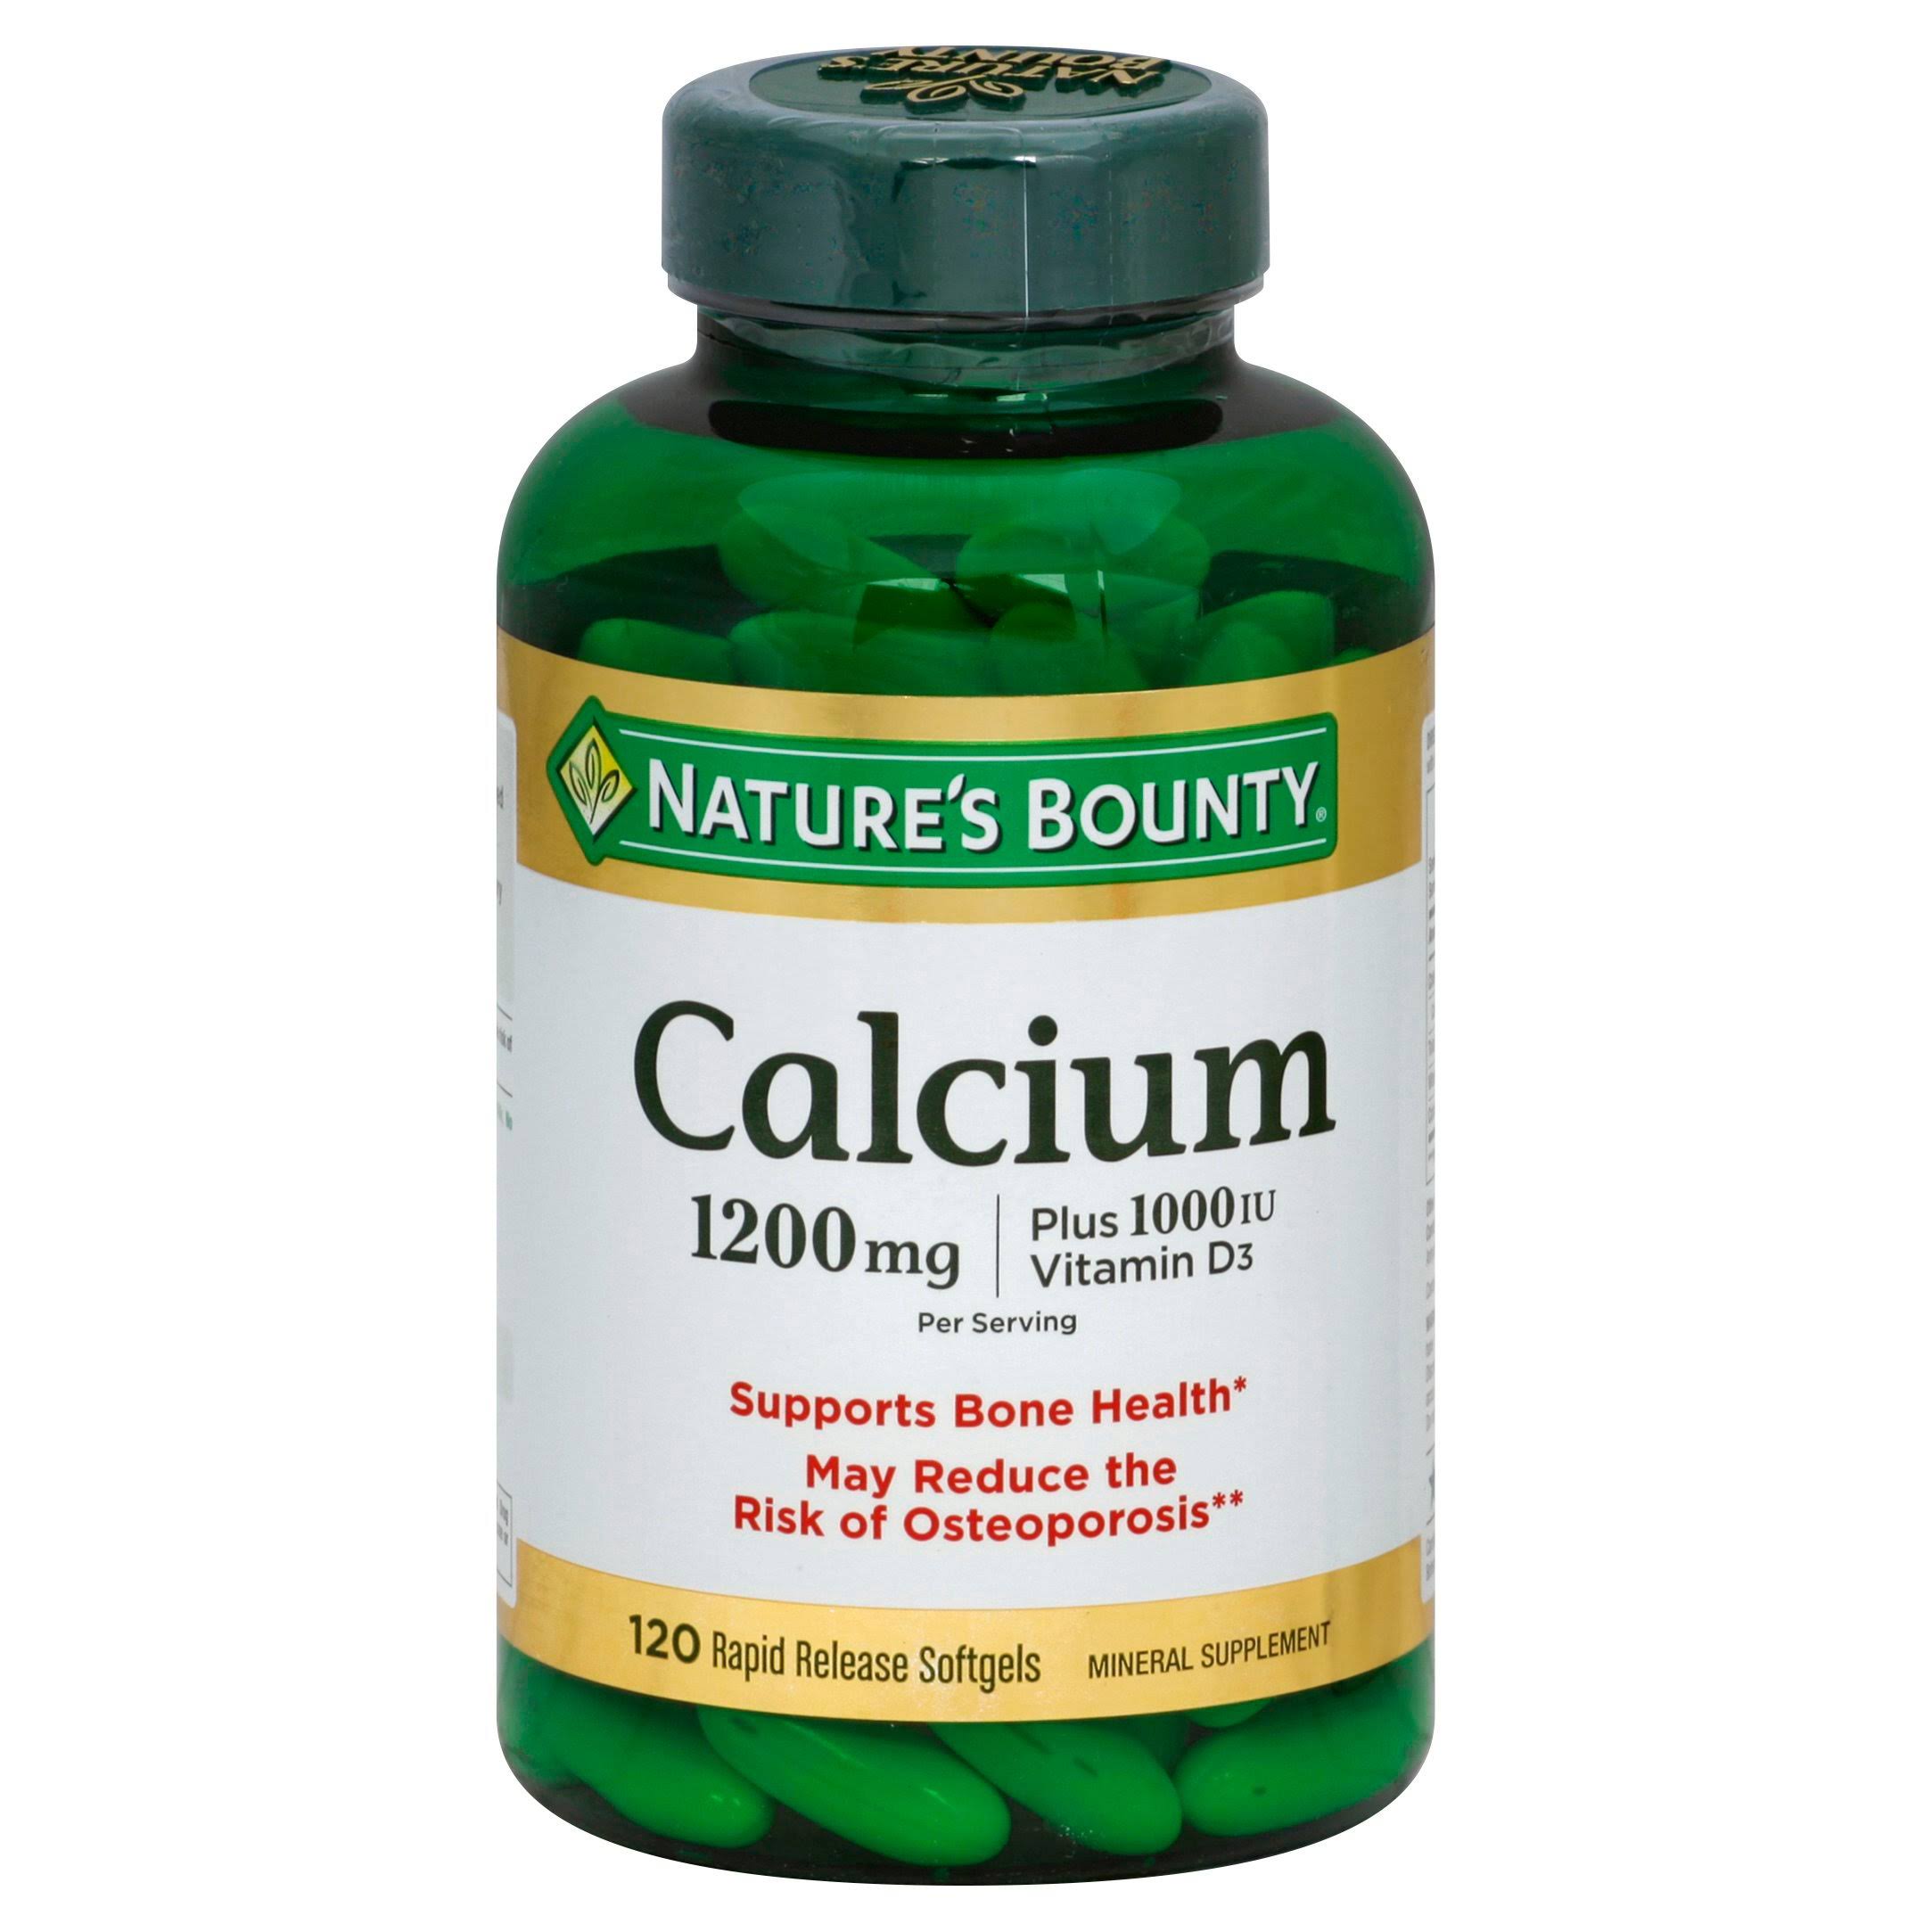 Nature's Bounty Calcium Plus 1000 IU Vitamin D3 Supplement - 120 Rapid Release Softgels, 1200mg